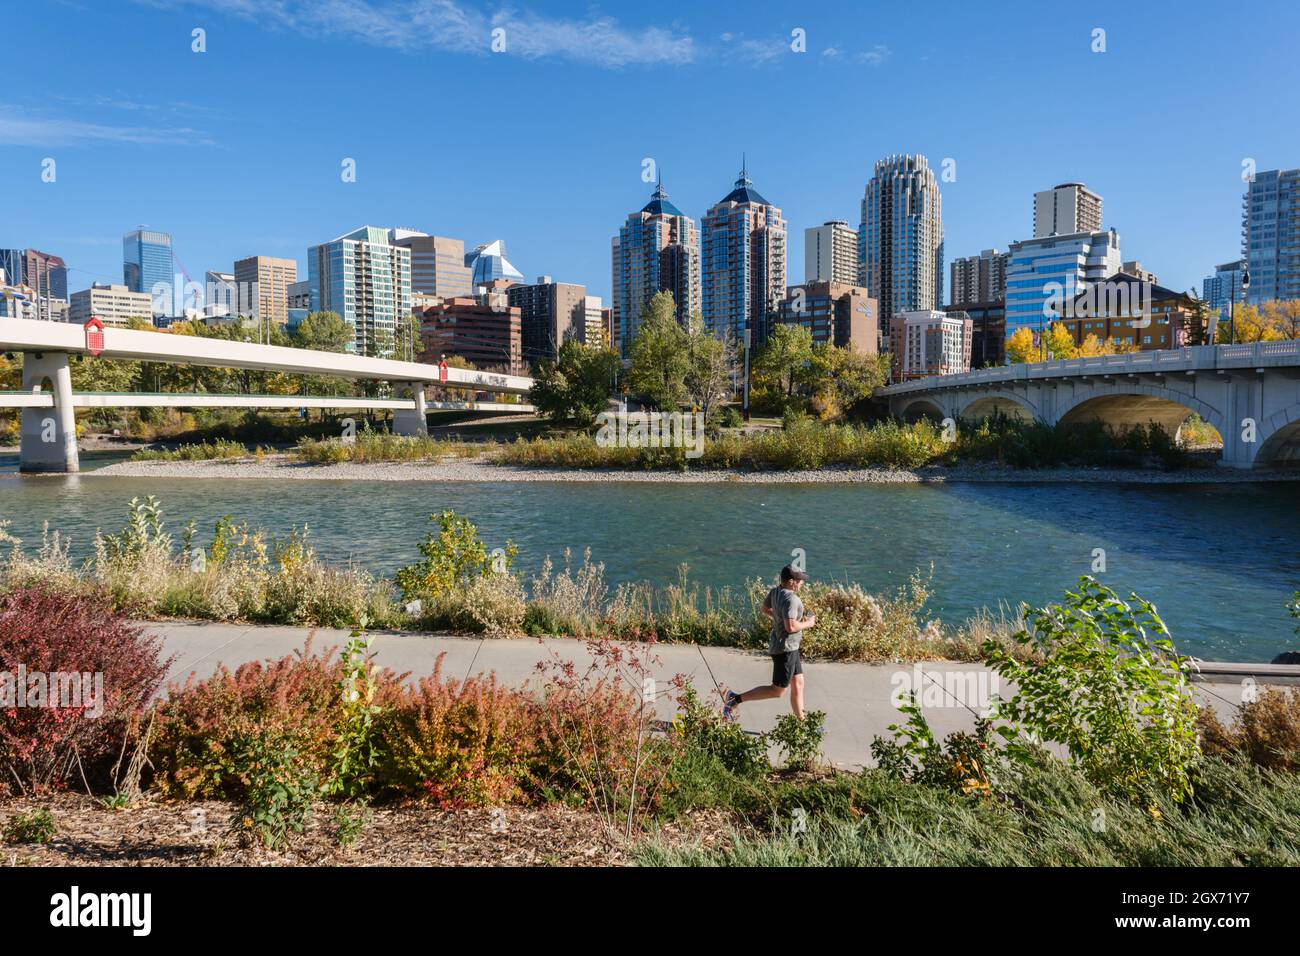 Calgary, Alberta, Canada - 27 septembre 2021 : Calgary Skyline et la rivière Bow en automne Banque D'Images